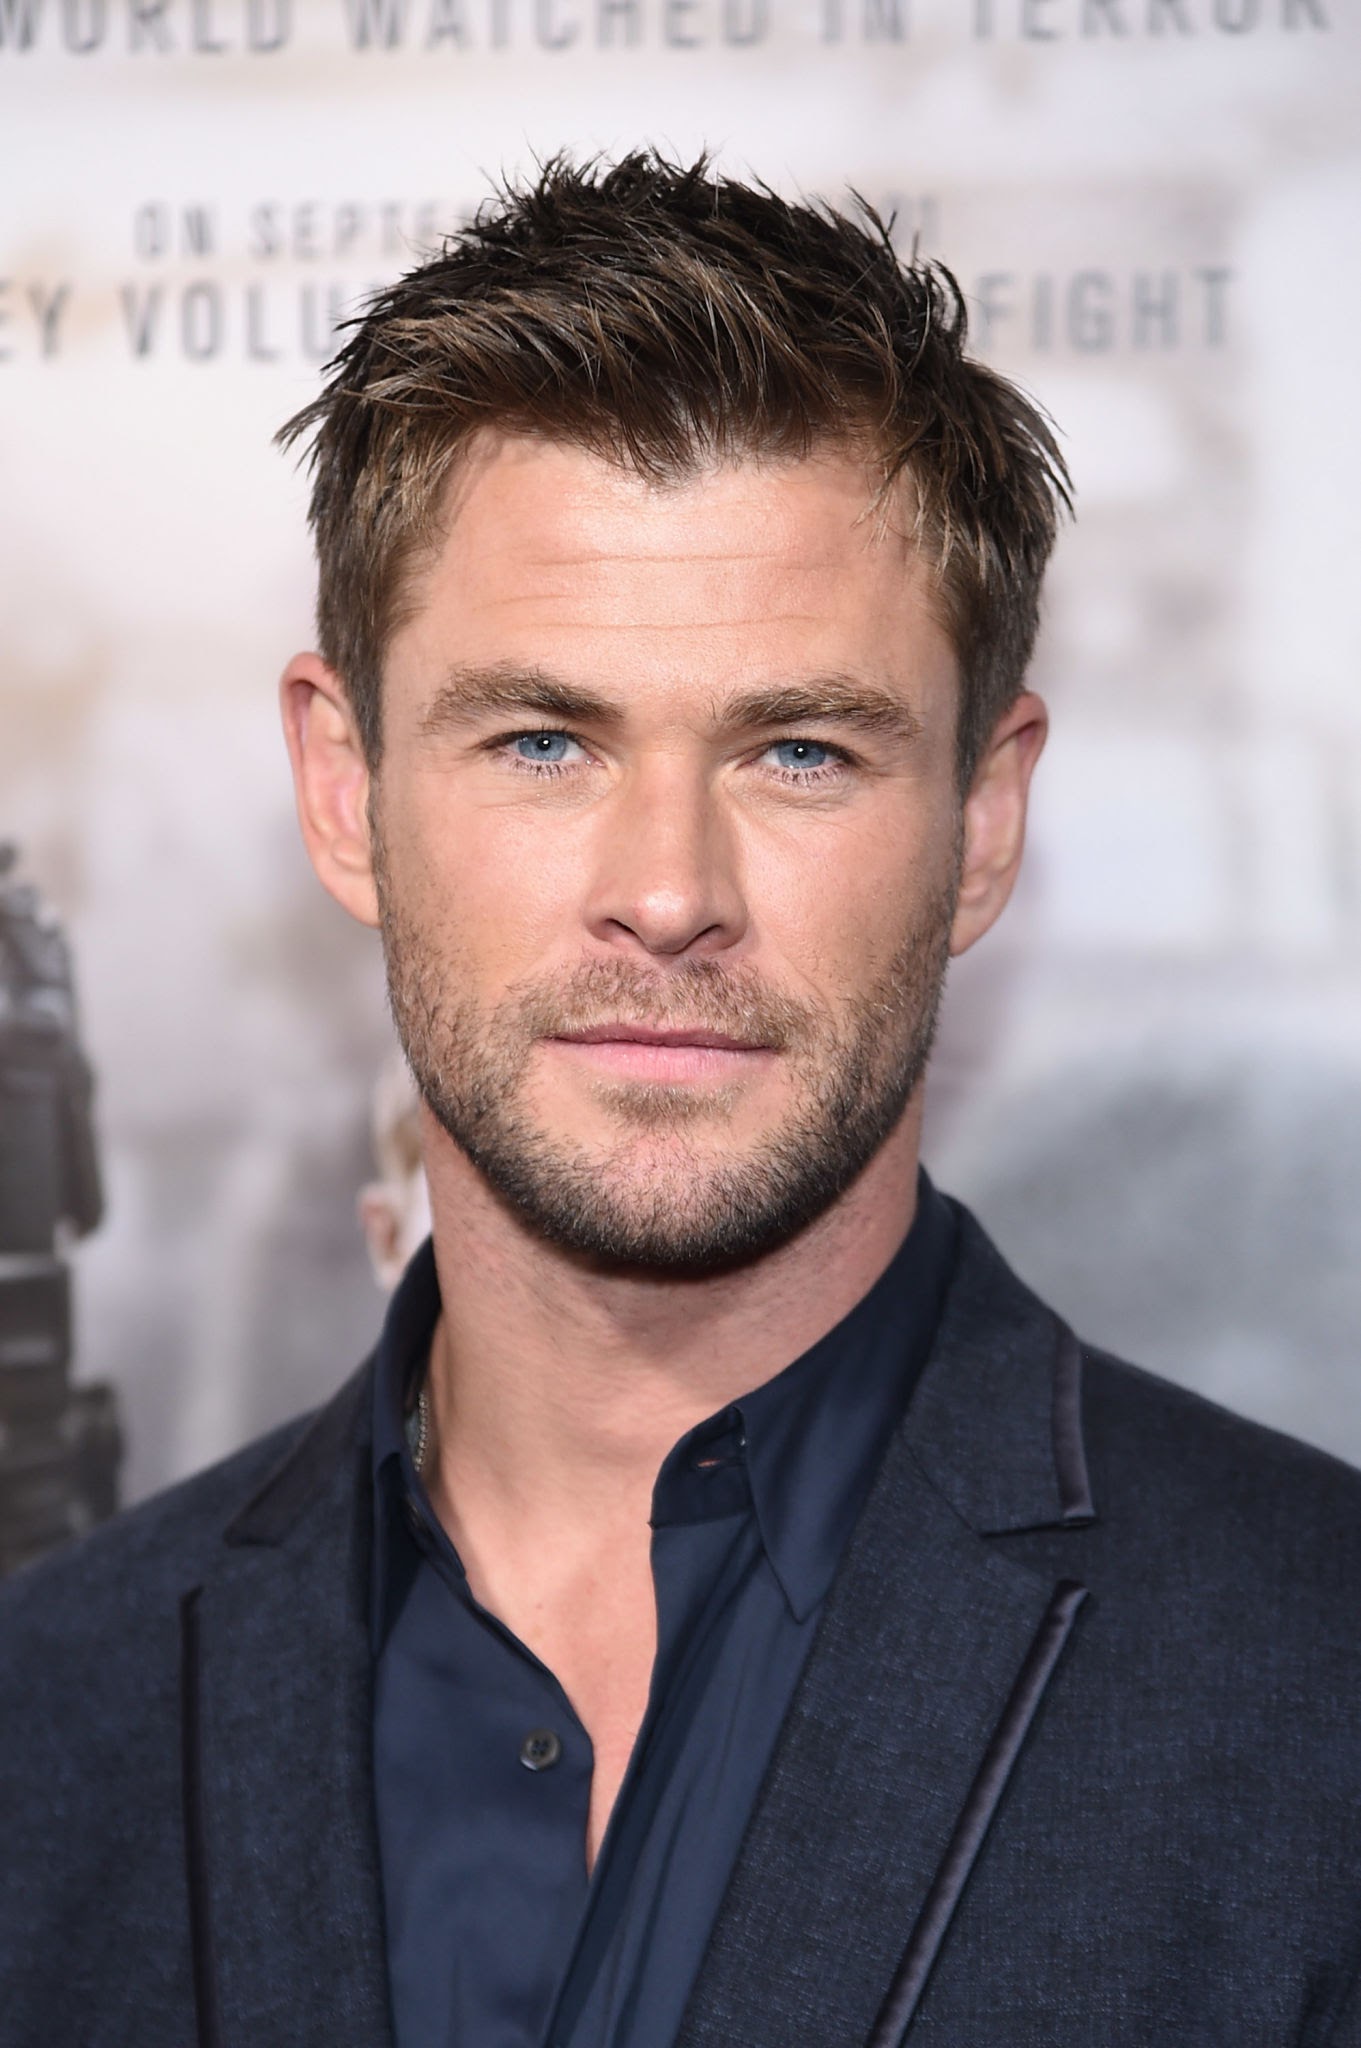 Chris Hemsworth - From Australia To Hollywood's Leading Man